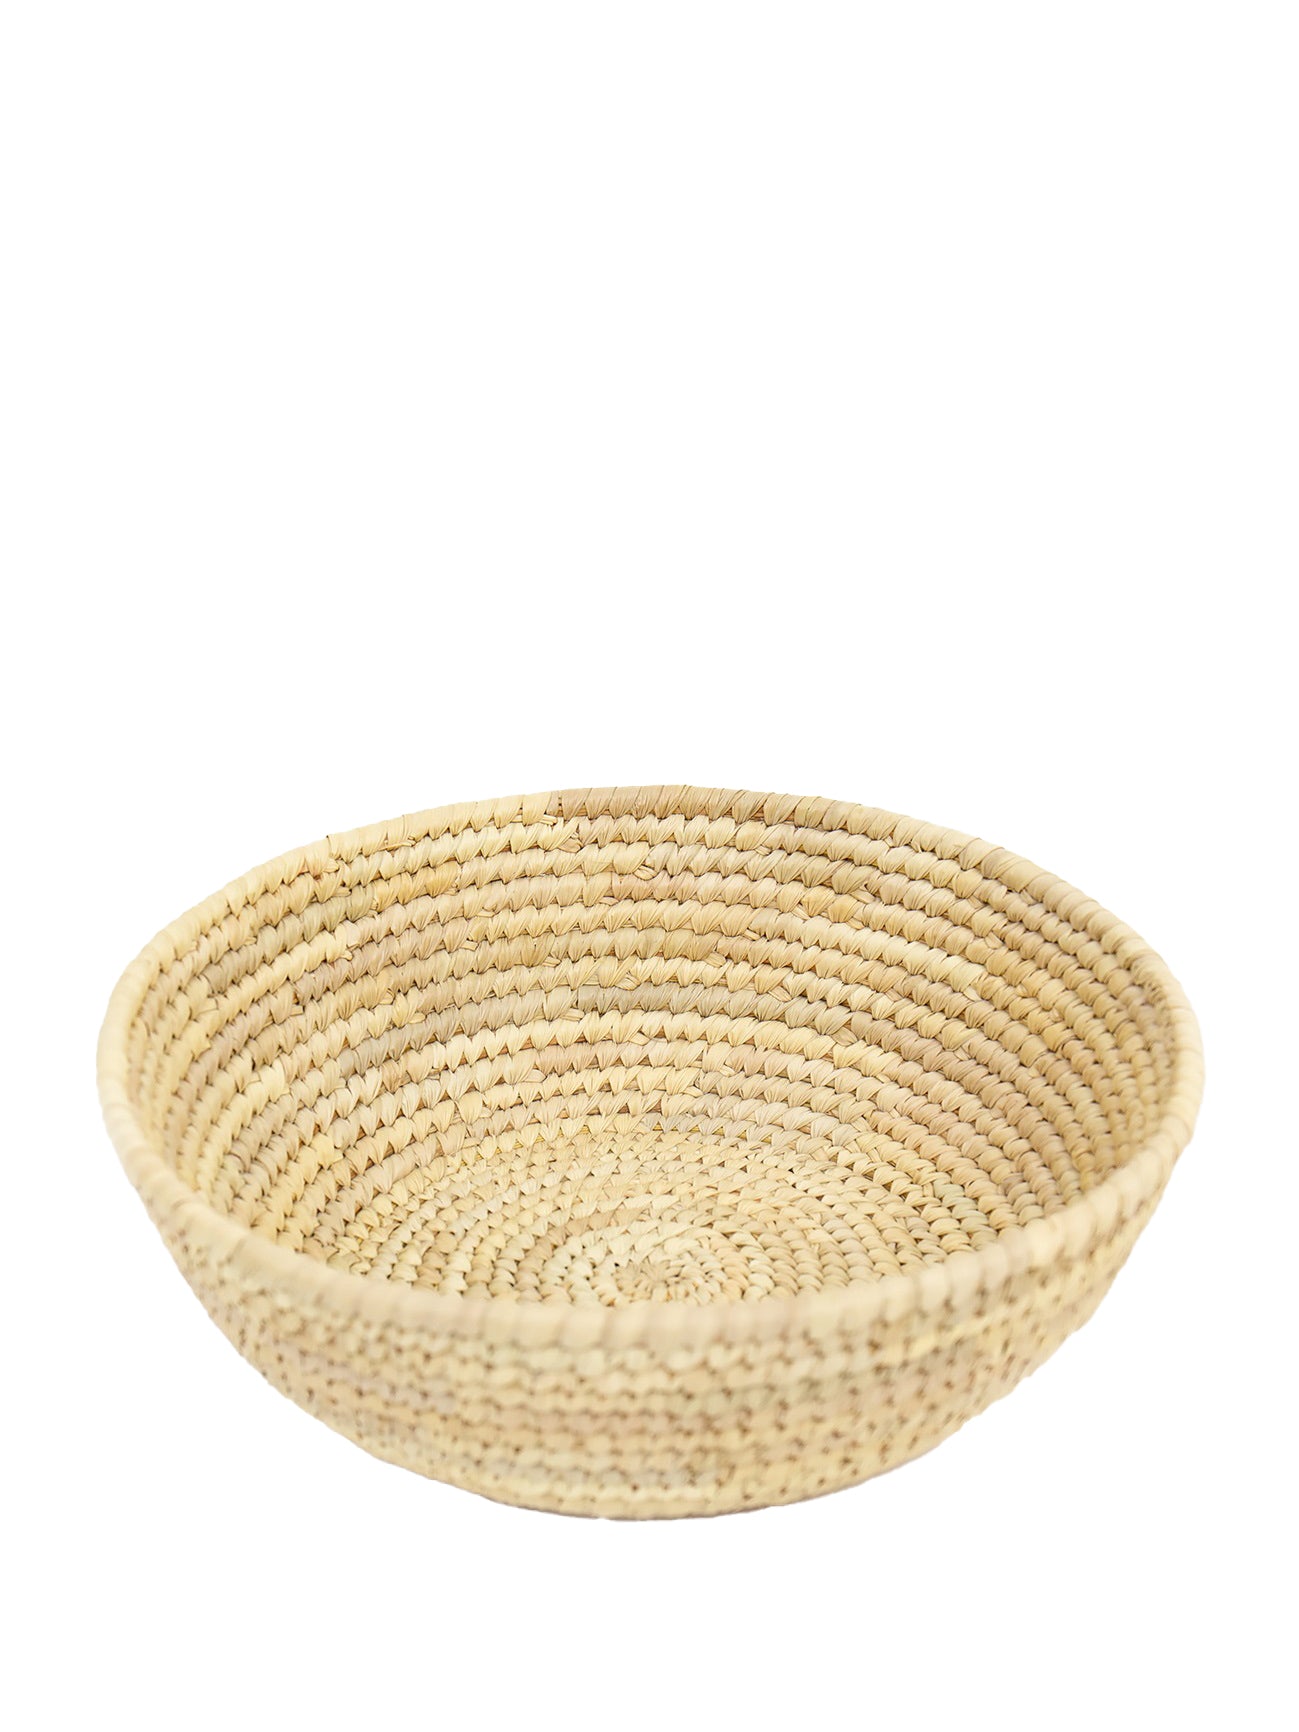 PALM Bread basket, natural